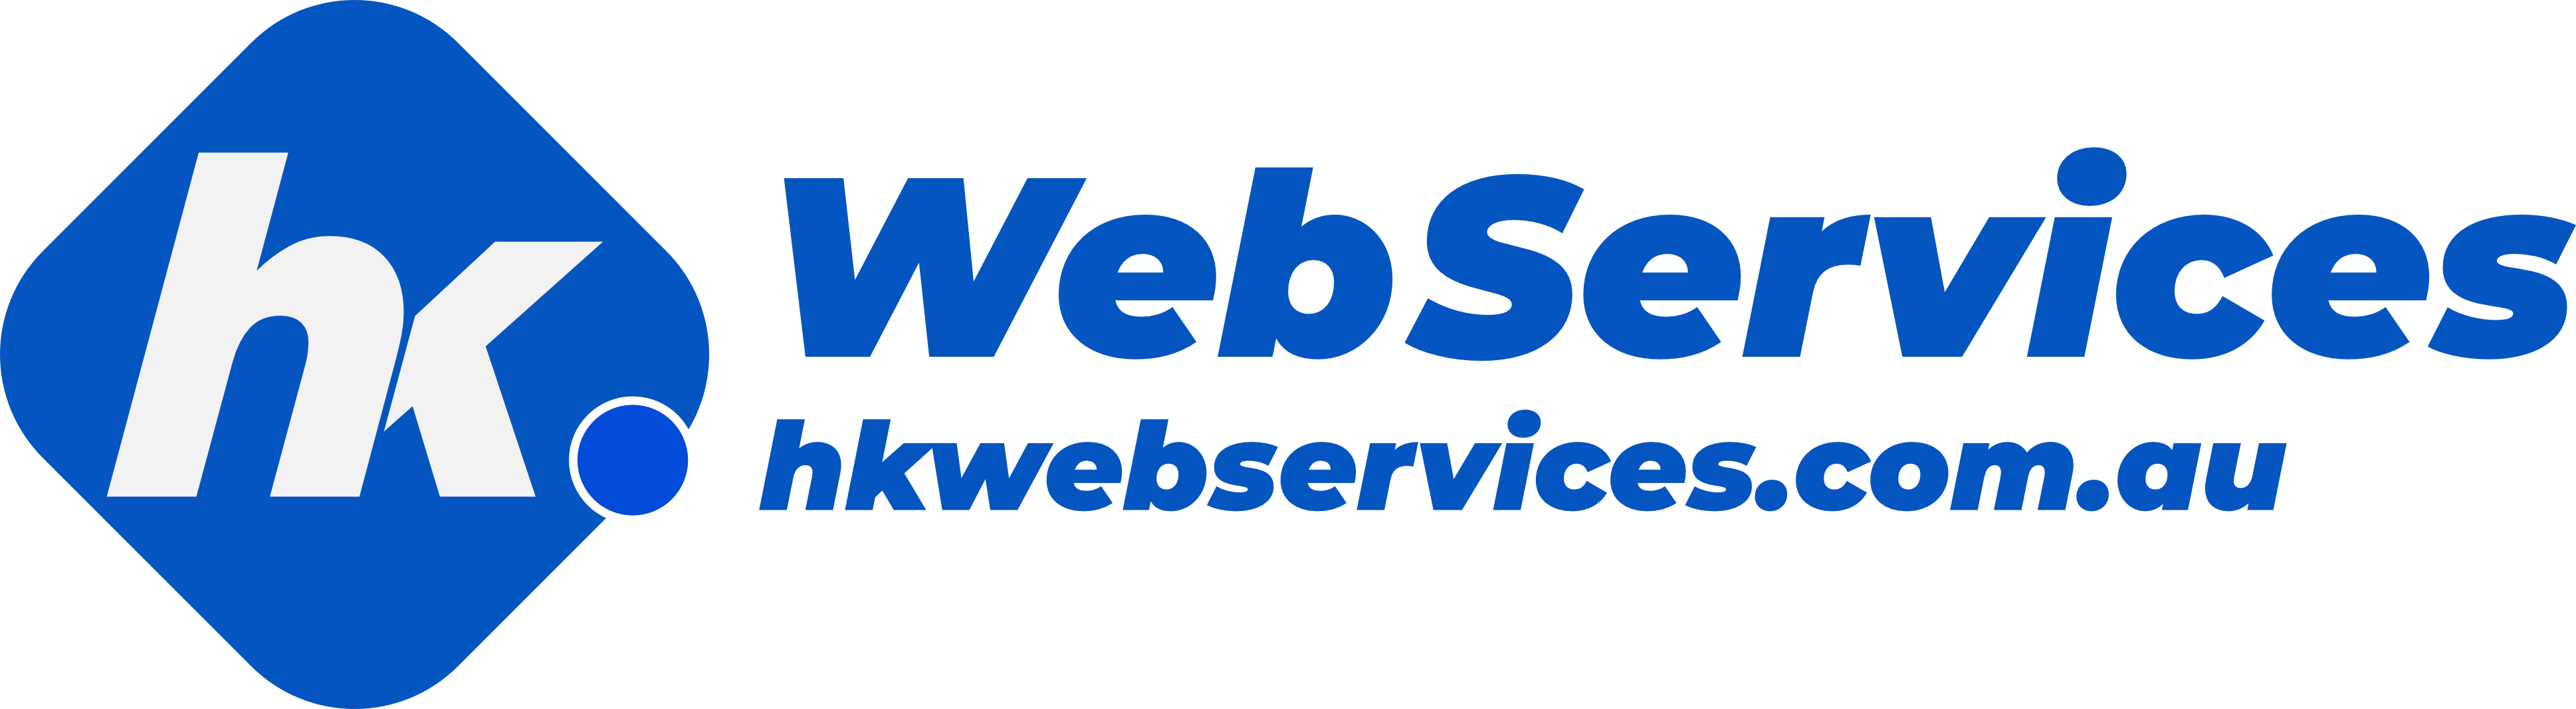 hk web services banner logo